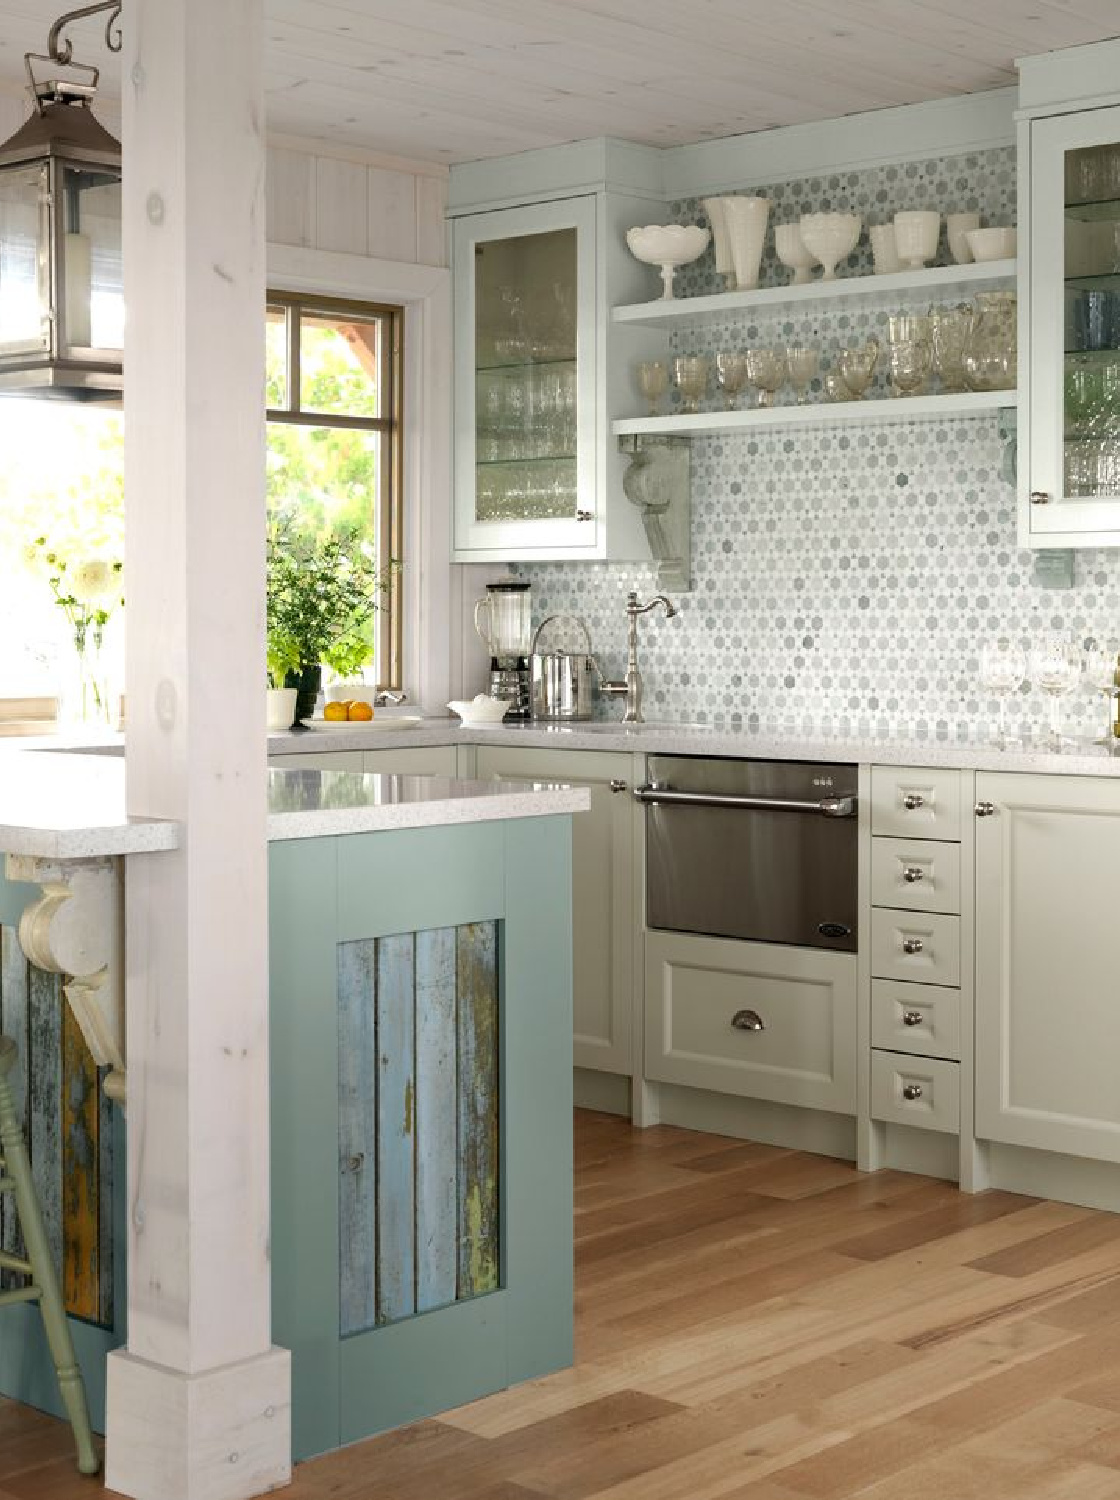 Sarah Richardson designed cottage kitchen with rustic elegant details and soft blue-green color palette - photo by Stacey Branford.